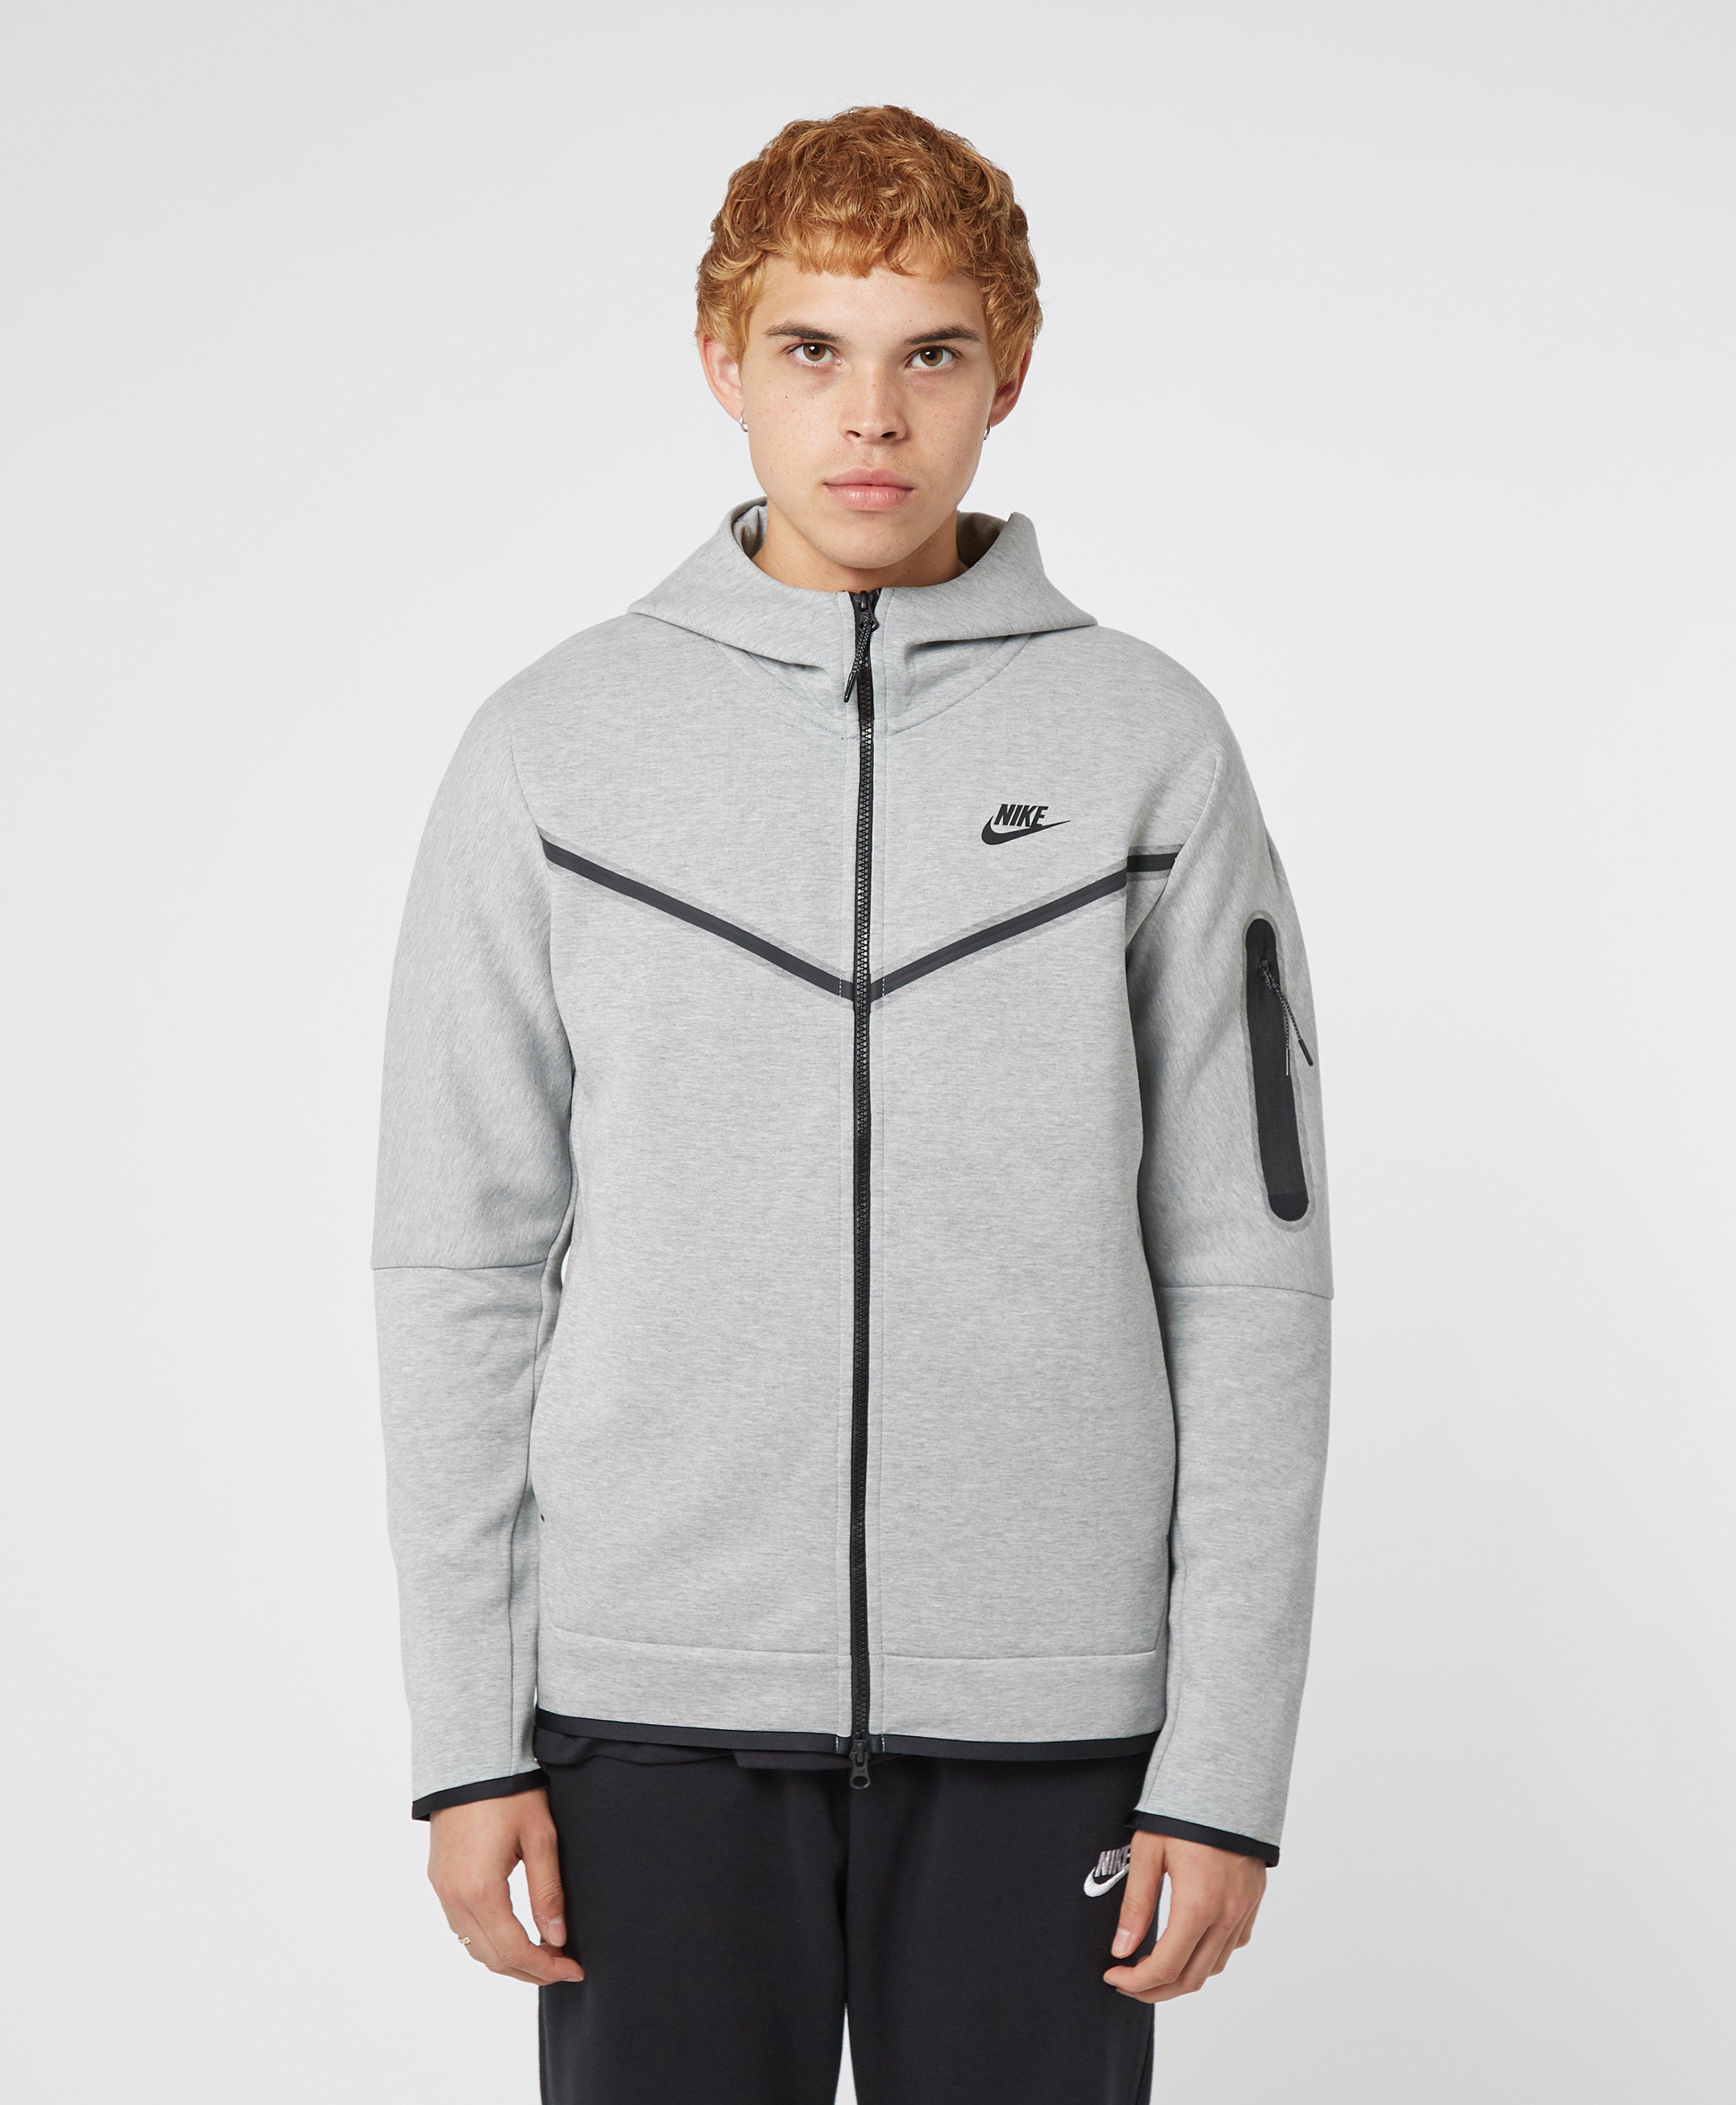 Nike Tech Fleece Full Zip Hoodie in Grey (Grey) for Men - Save 15% | Lyst  Canada